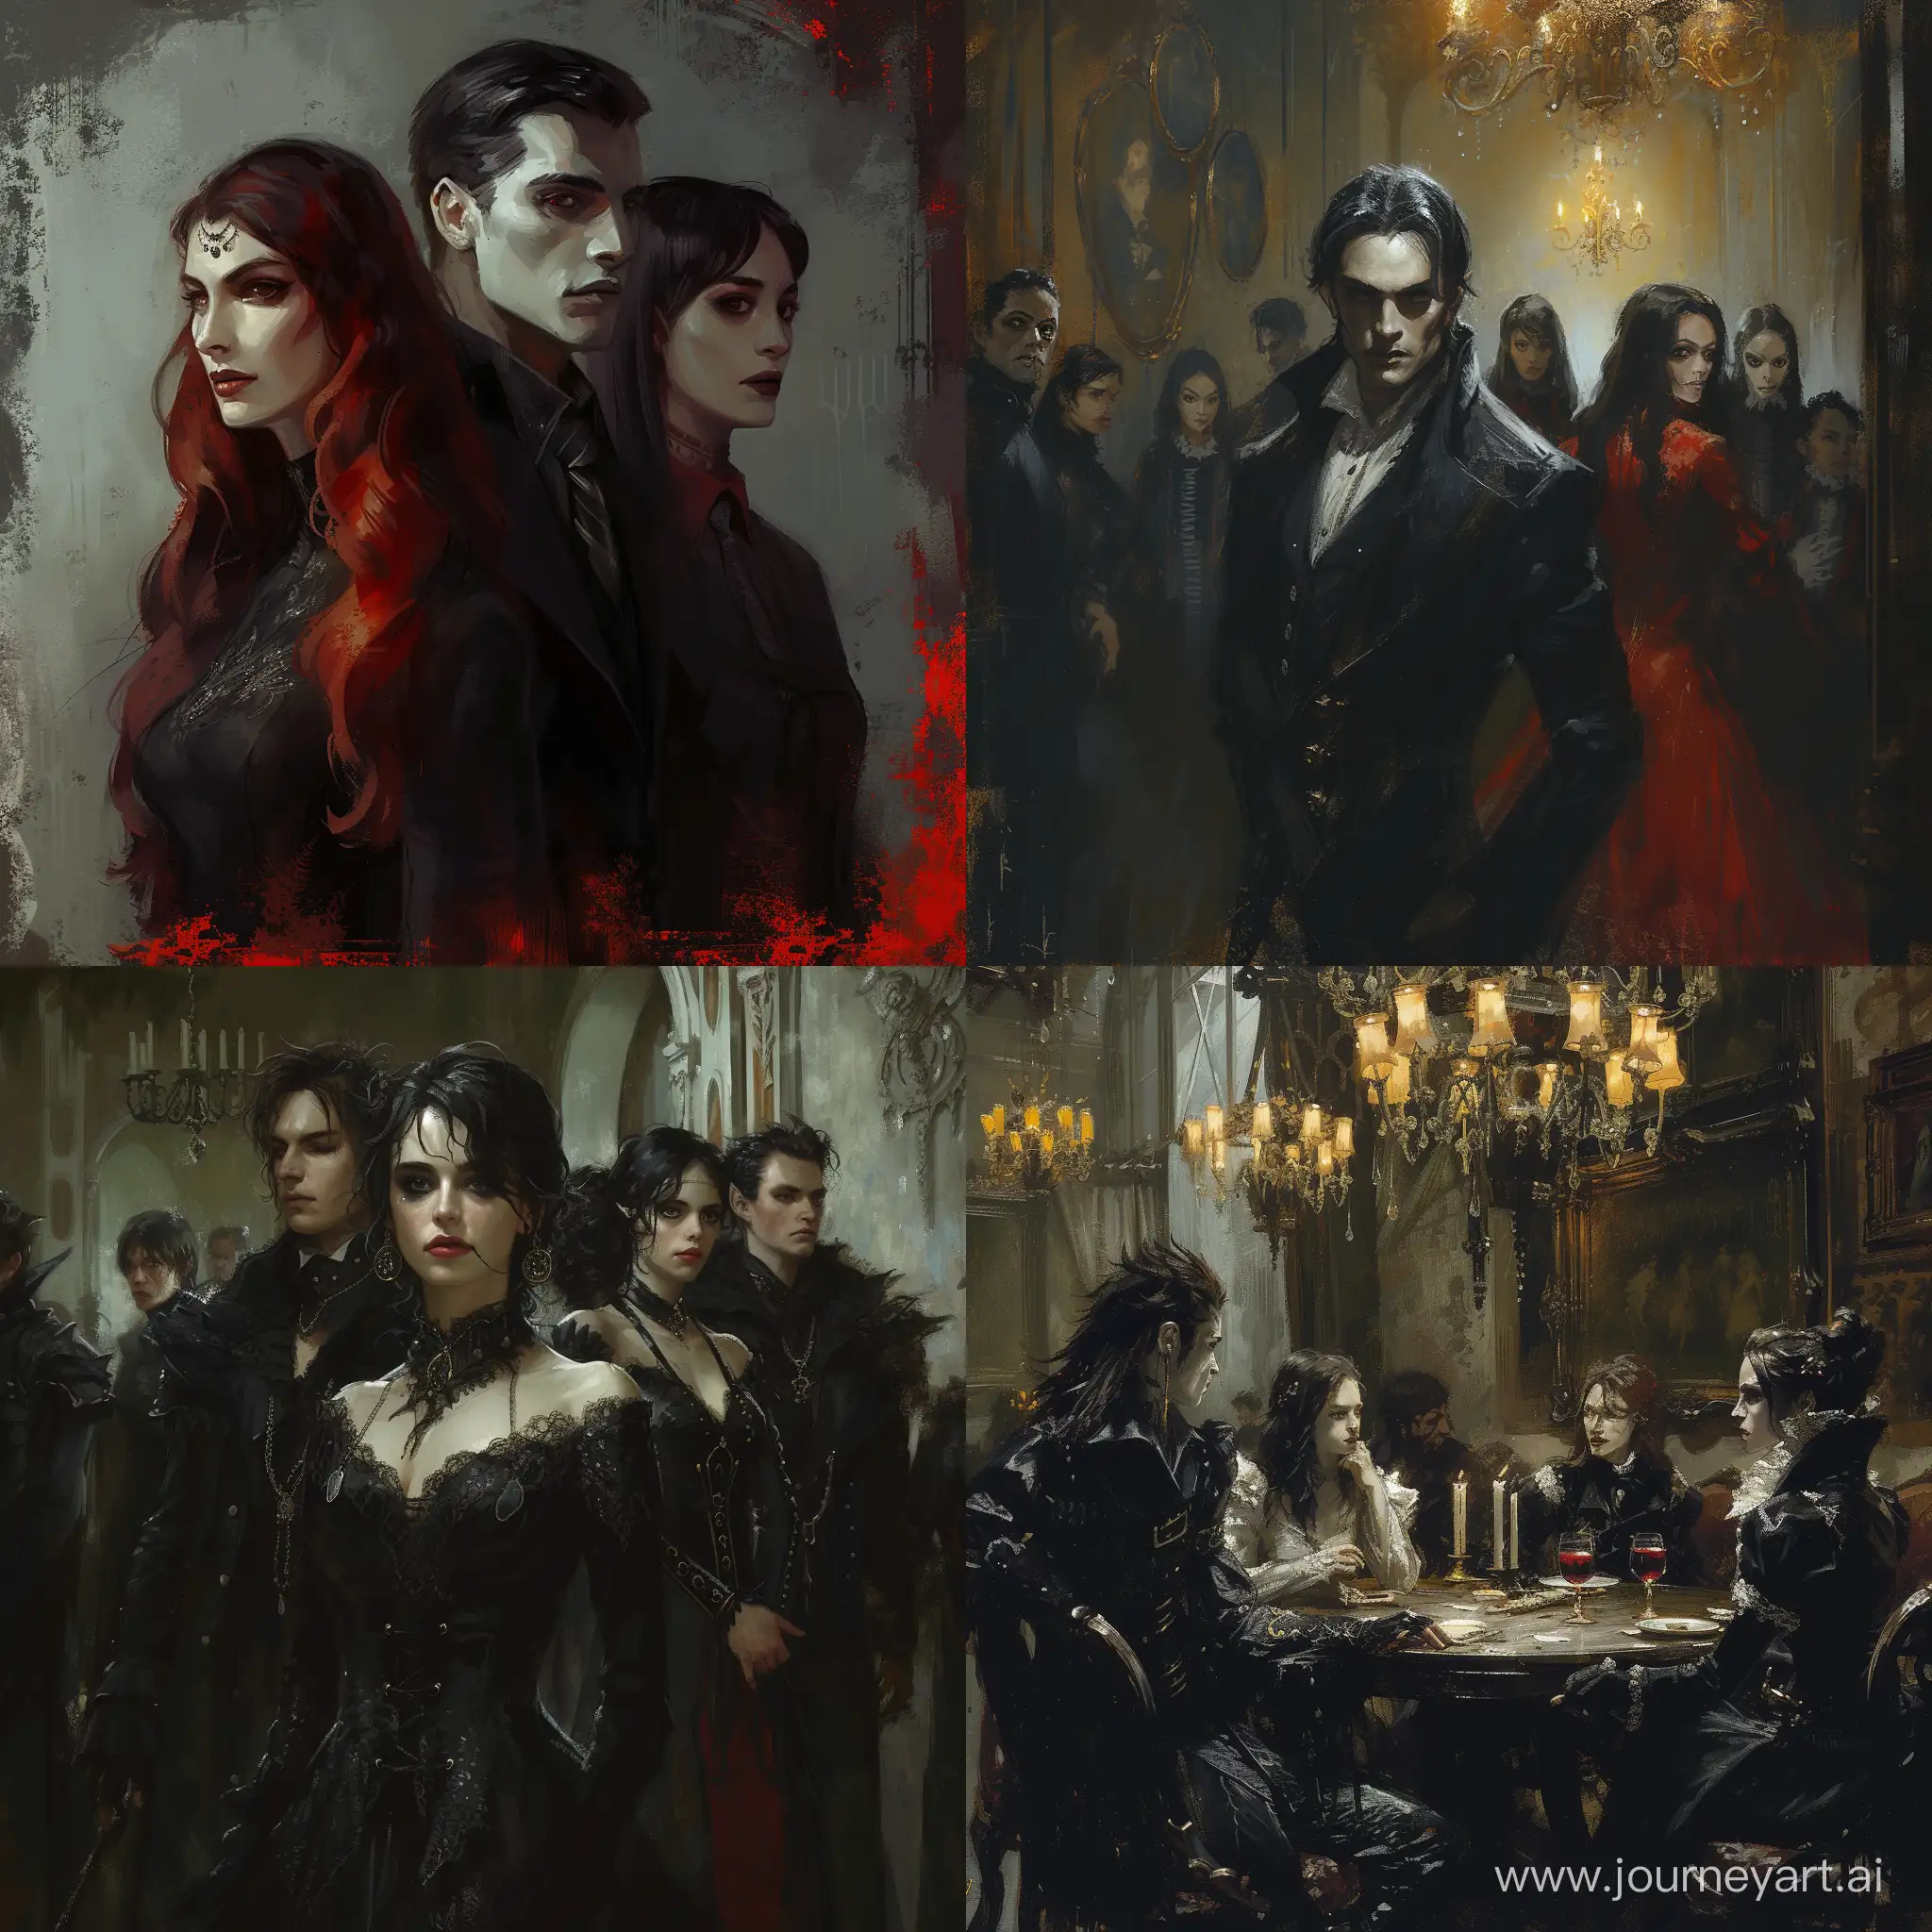 An Academy of vampires